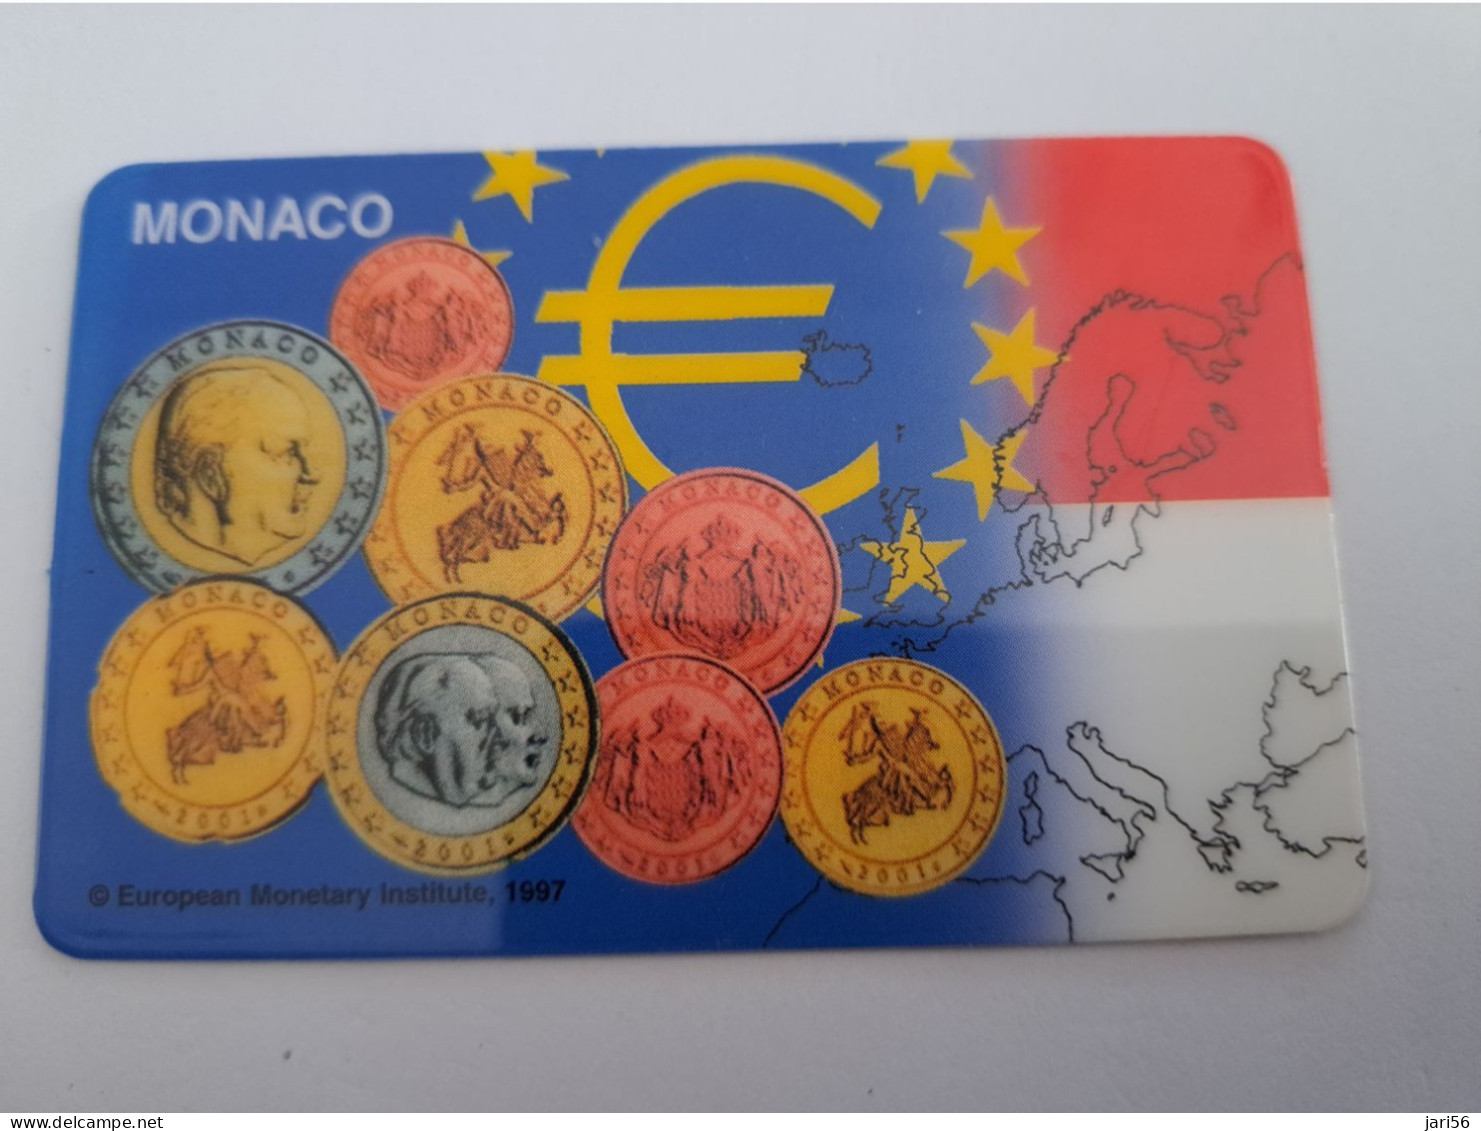 GREAT BRITAIN   20 UNITS   / EURO COINS/ MONACO       PHONECARD   (date 06/ 2002)  PREPAID CARD / MINT      **14829** - [10] Sammlungen